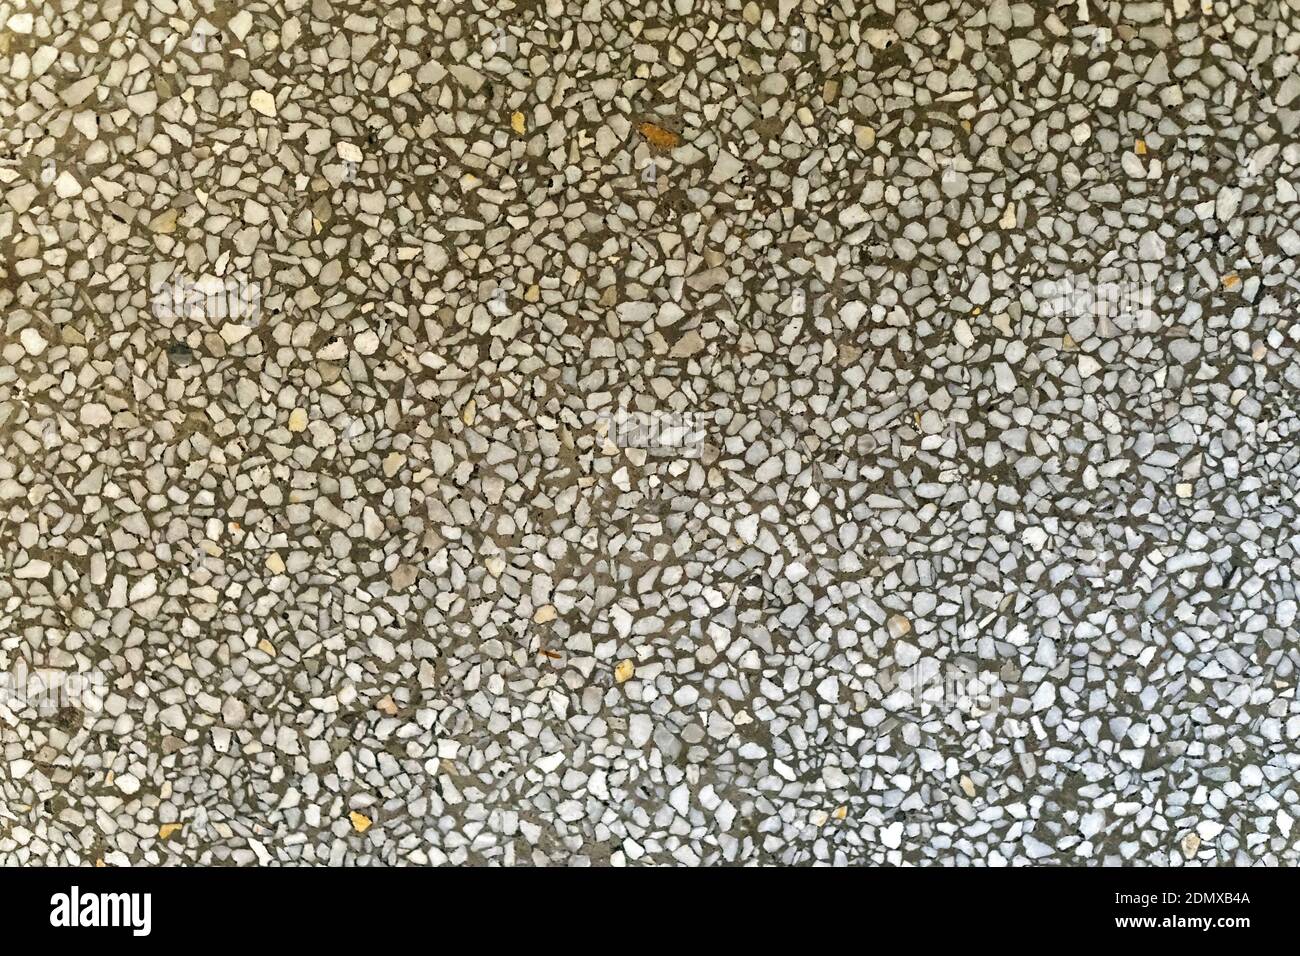 Italian style terrazzo floor composite material background Stock Photo